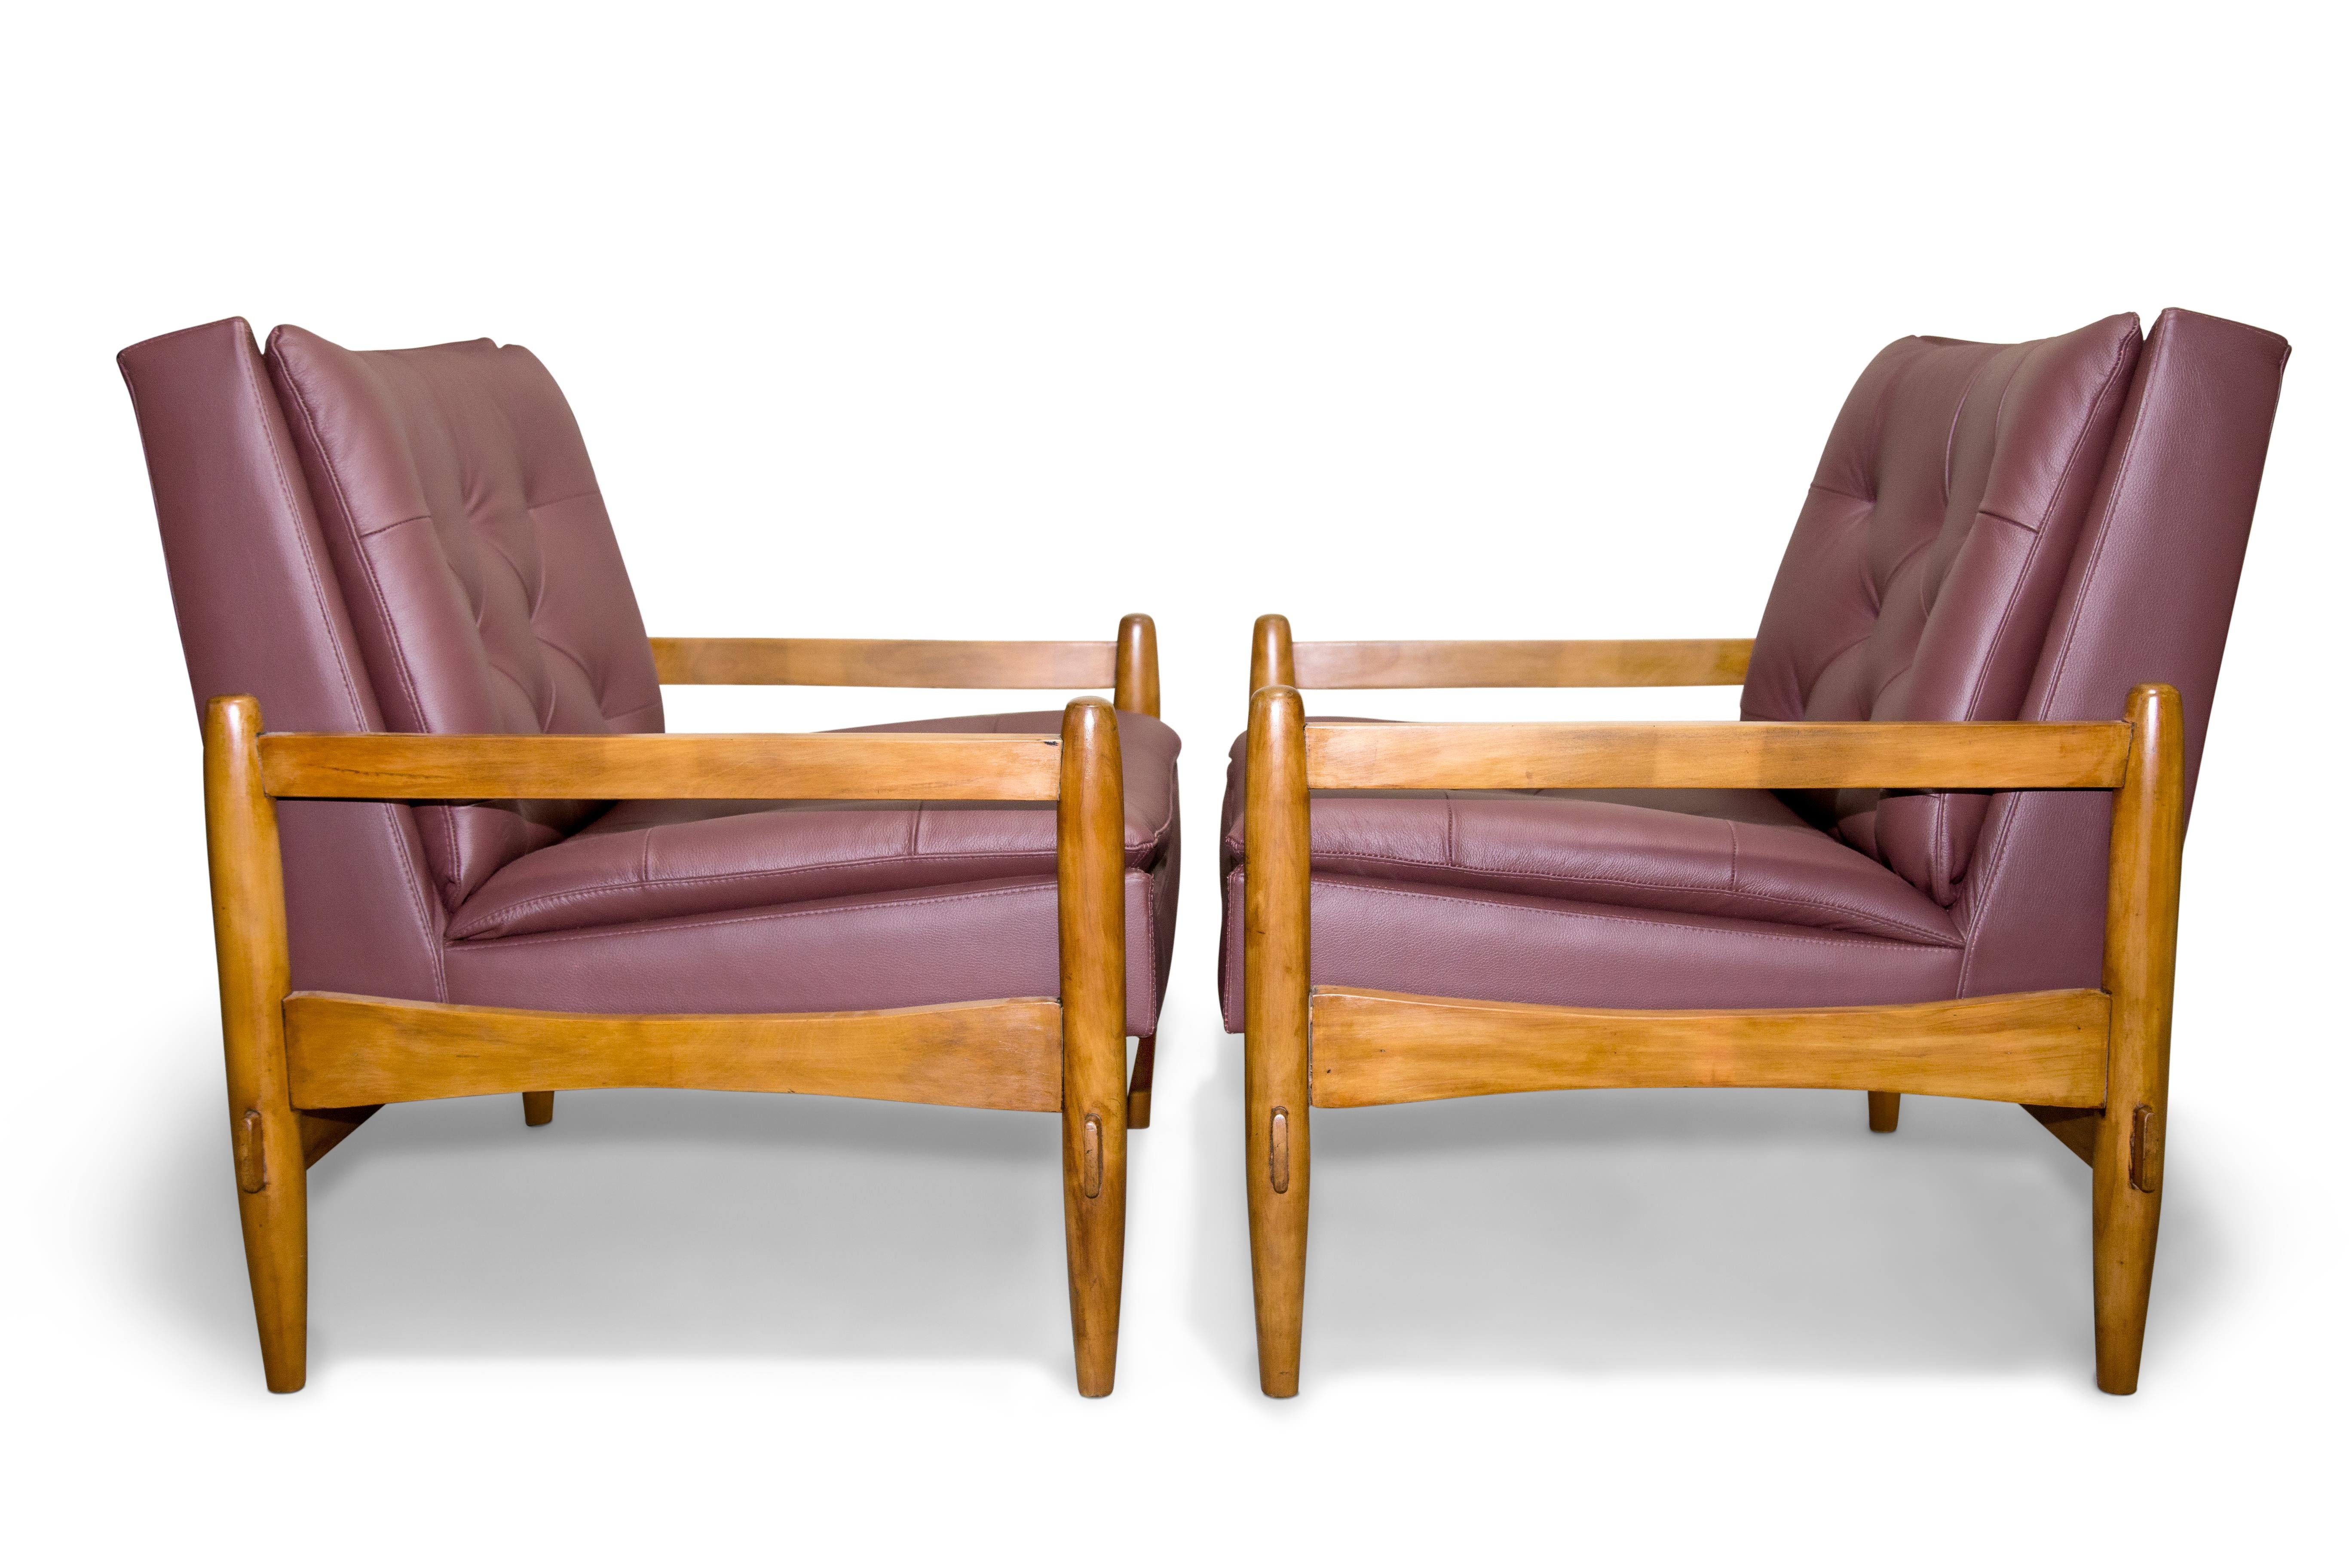 Mid-20th Century Brazilian Modern Armchair Pair in Purple Leather & Hardwood, Cimo, Brazil, 1960 For Sale